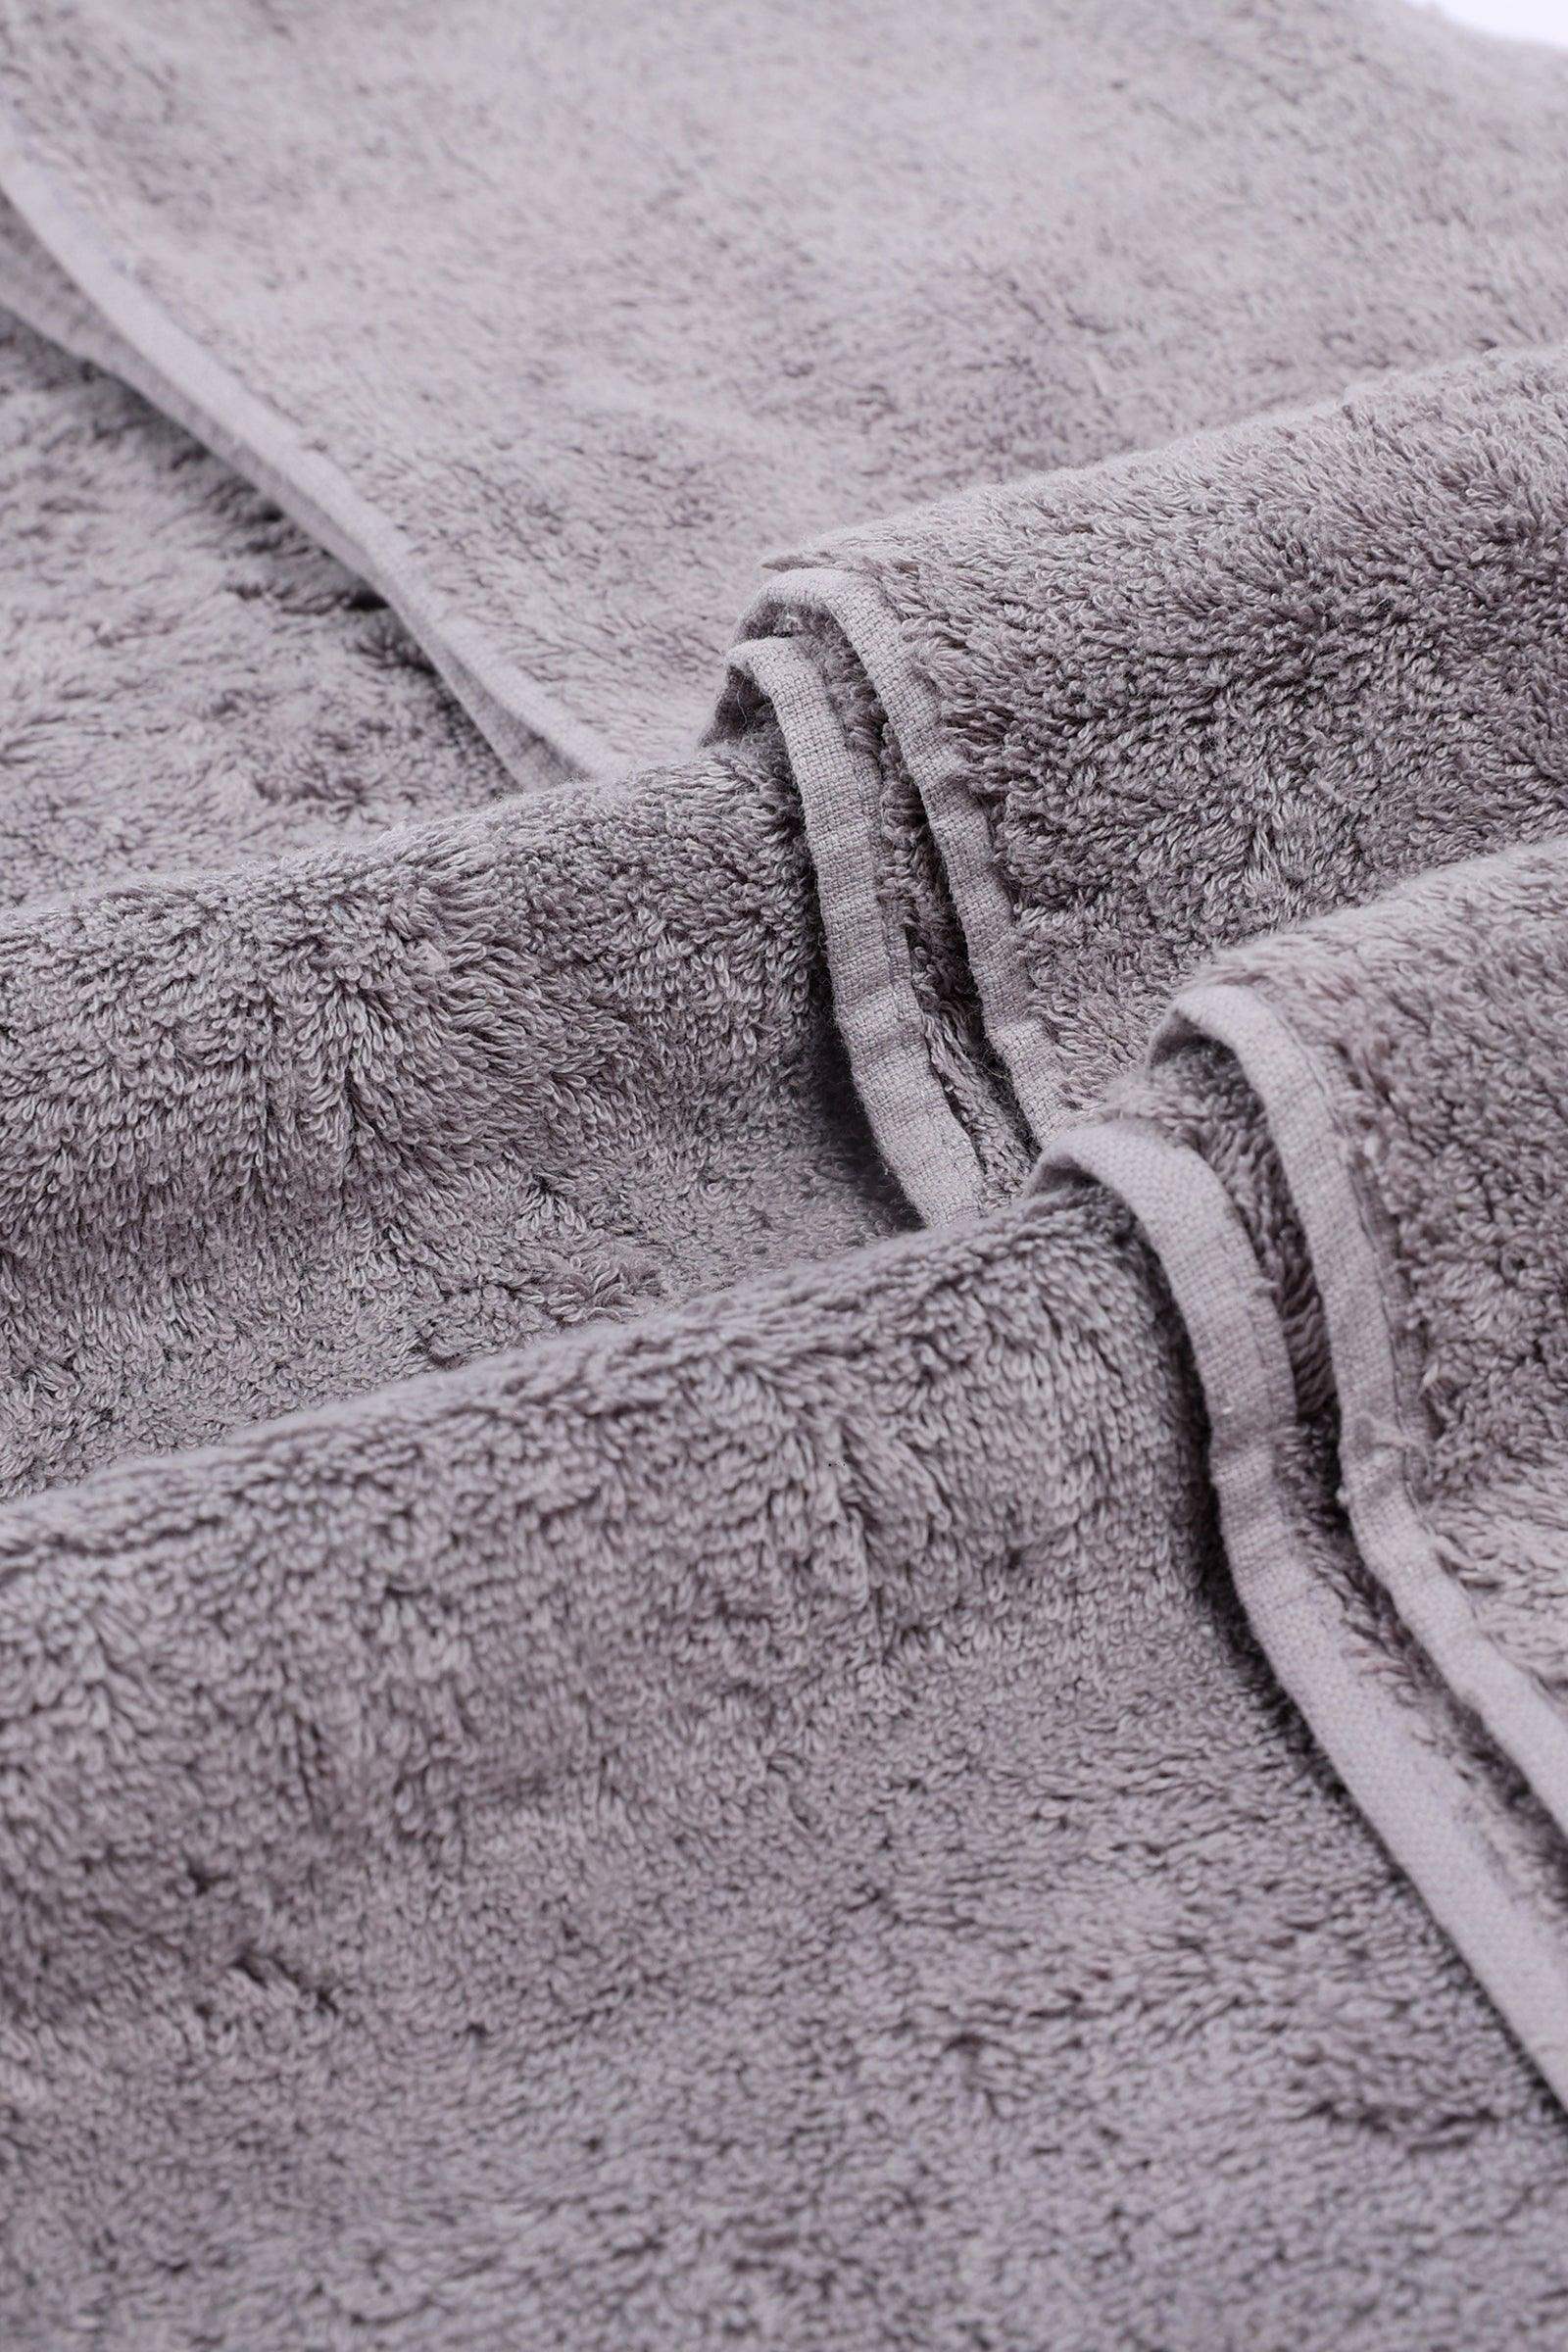 Bath Towel - 140x70 cm - Carina - كارينا